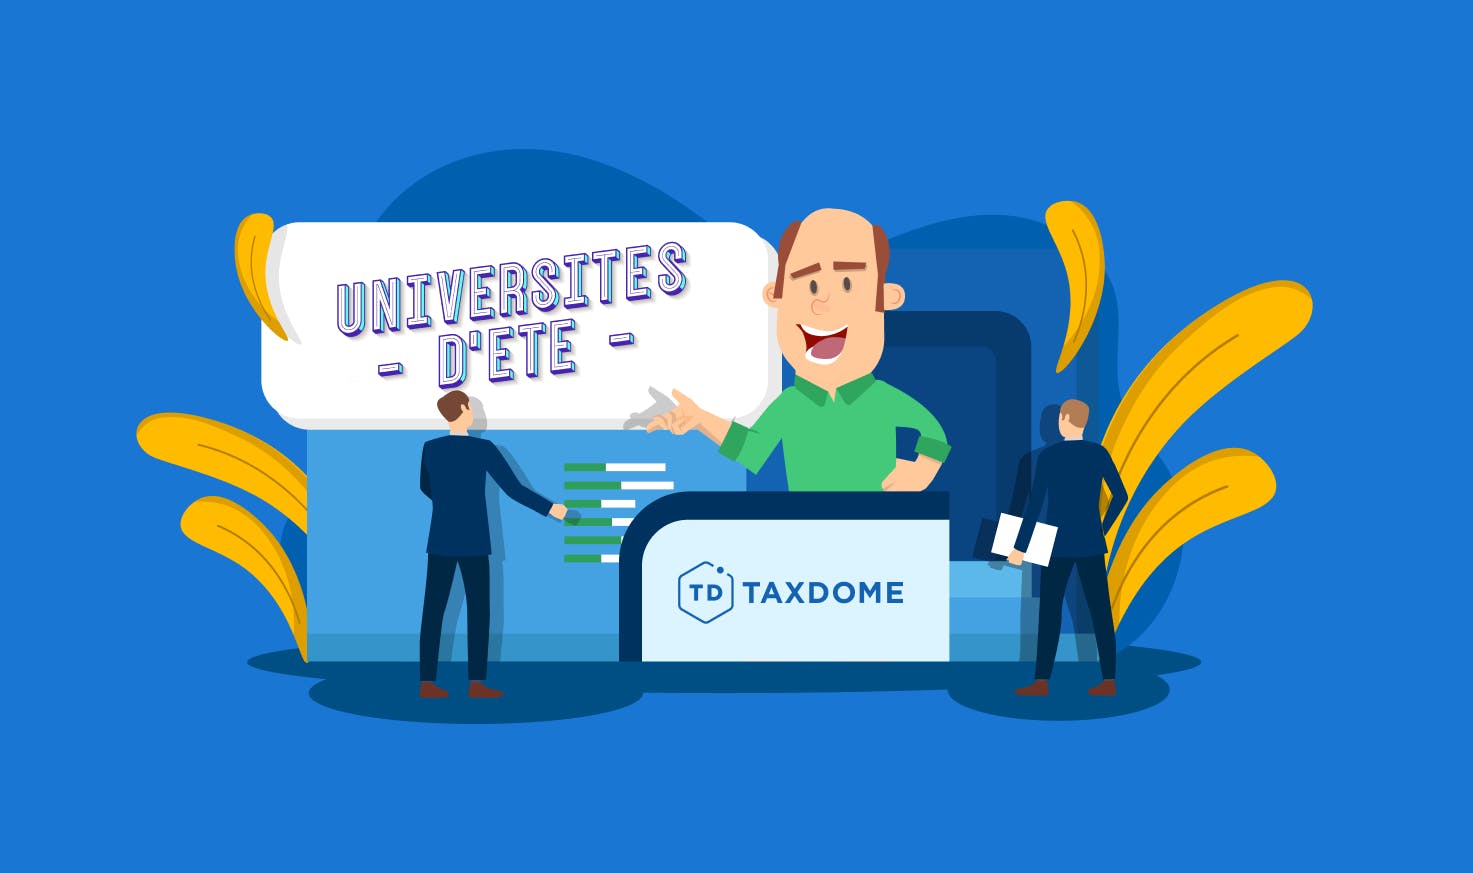 TaxDome op “Universités d’été” 2022